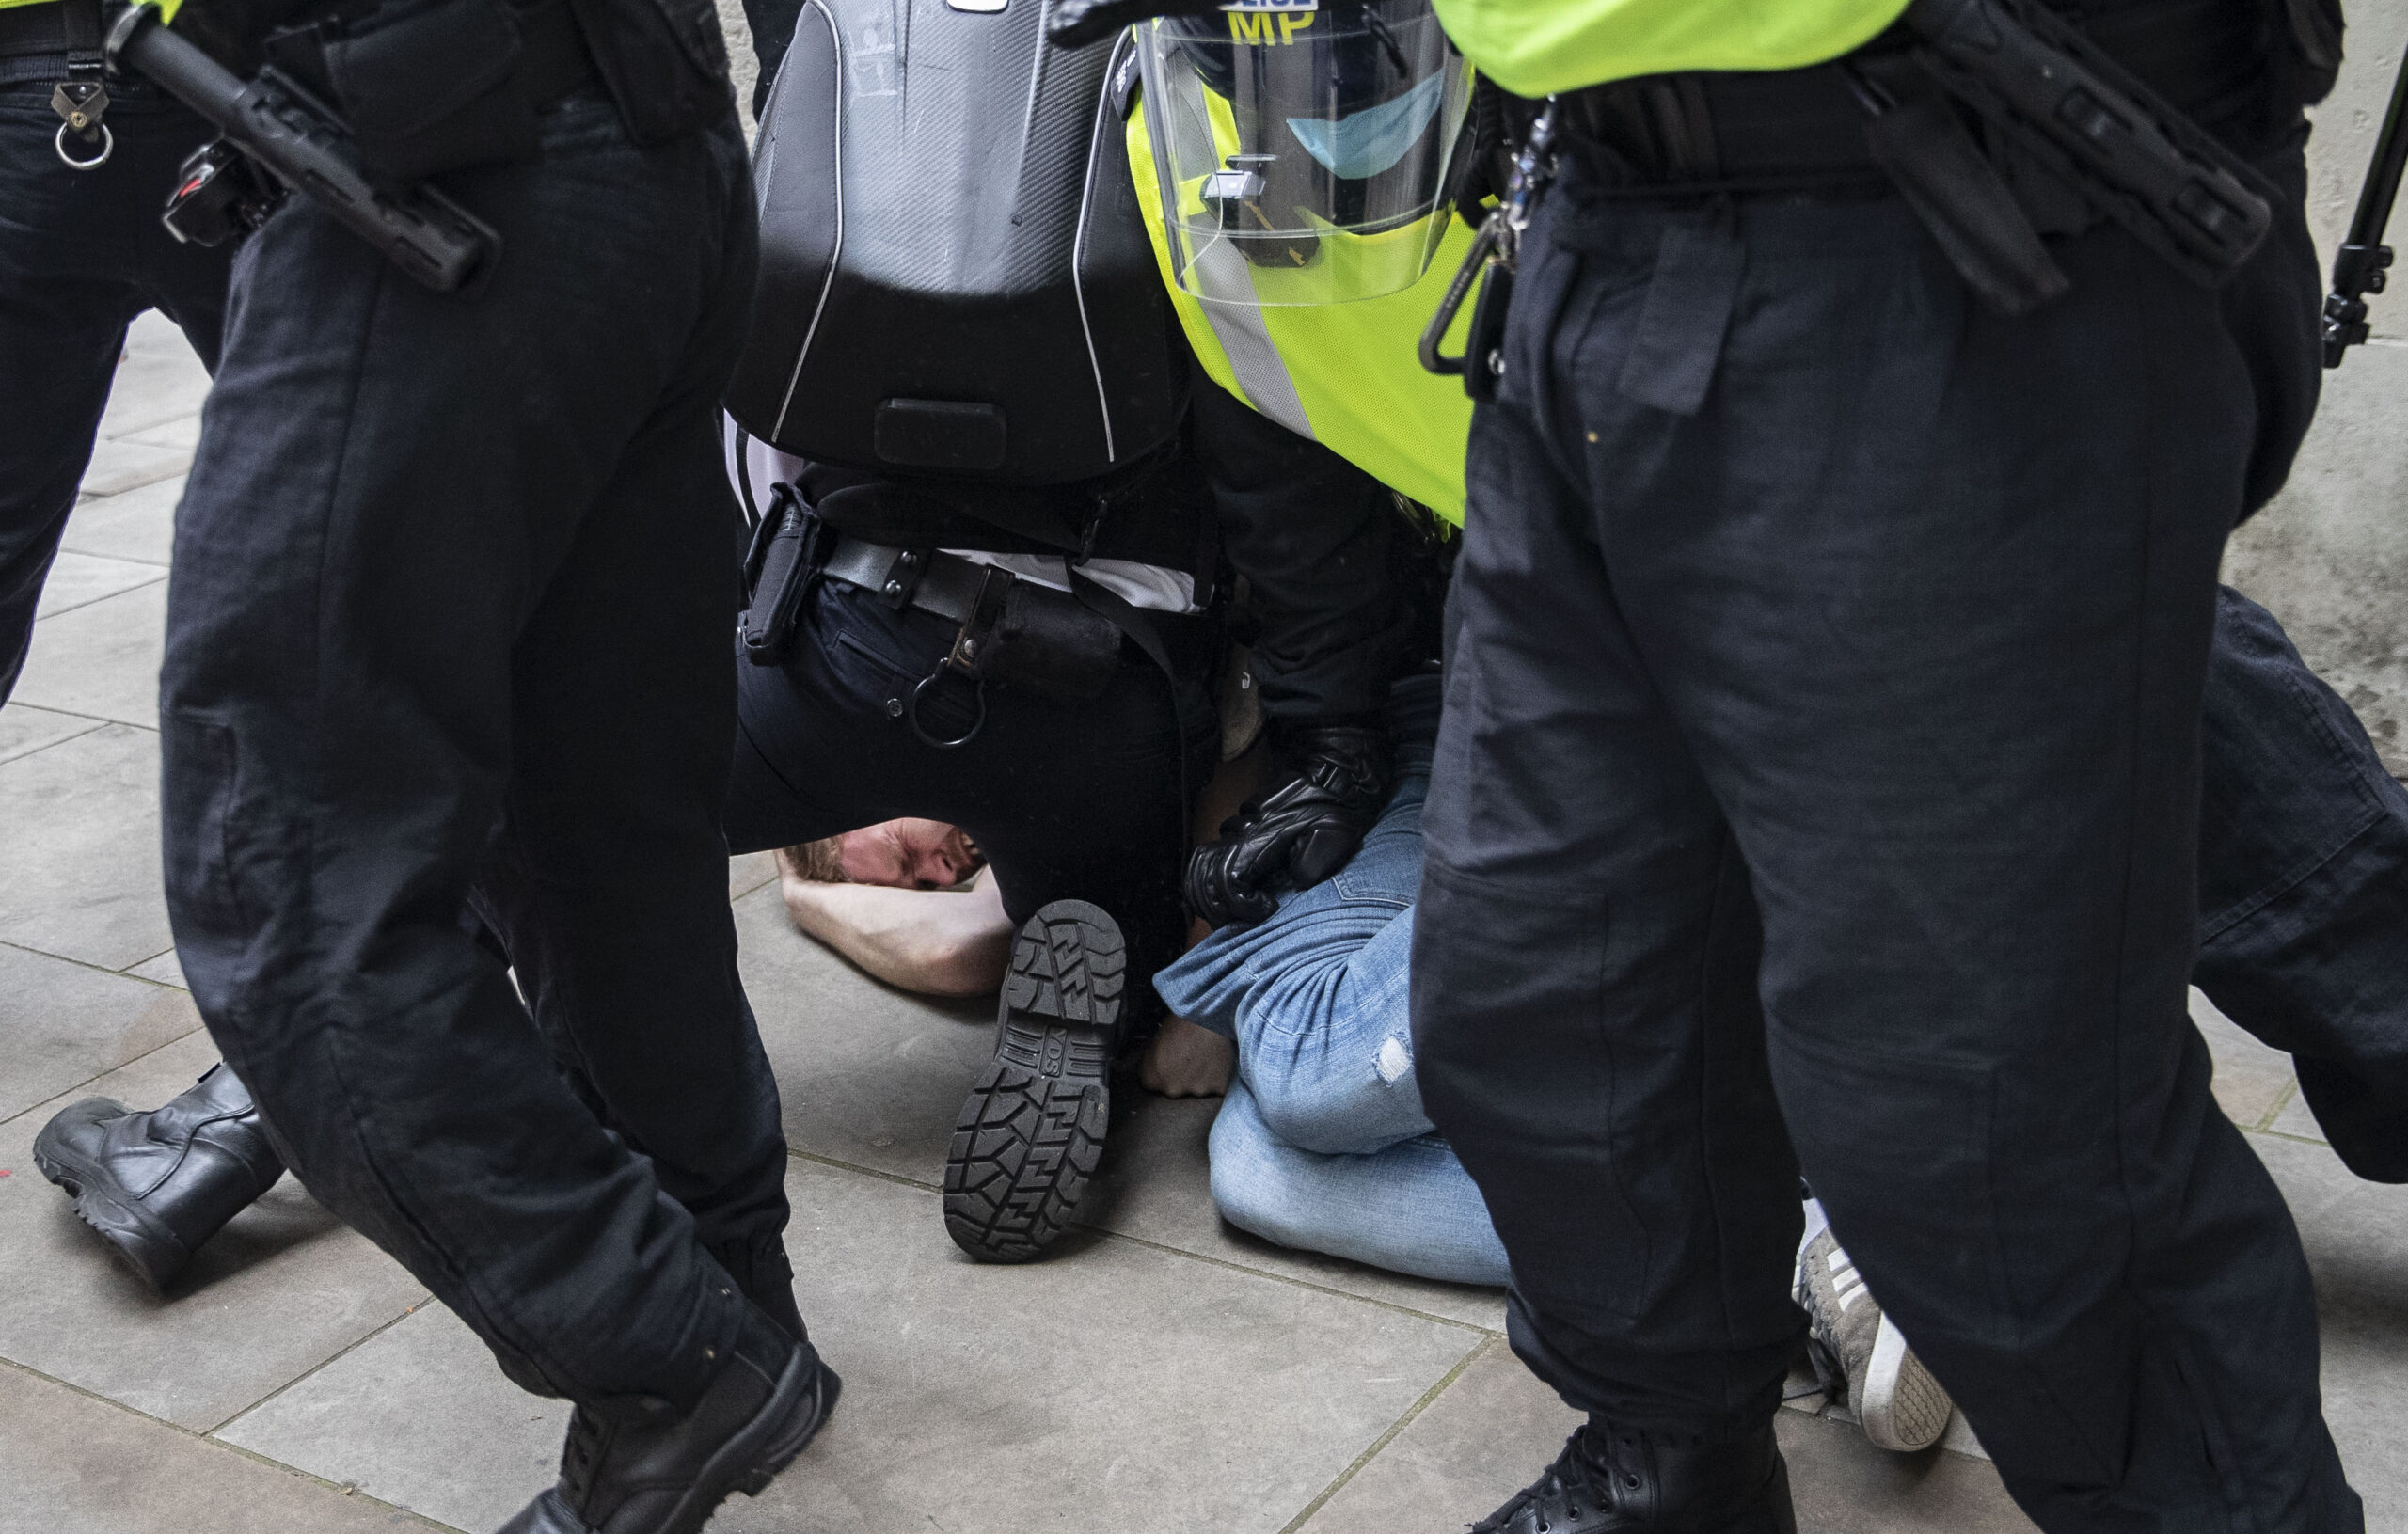 Задержание на акции протеста в Лондоне. Фото May James/ZUMA Press Wire/Scanpix/Leta